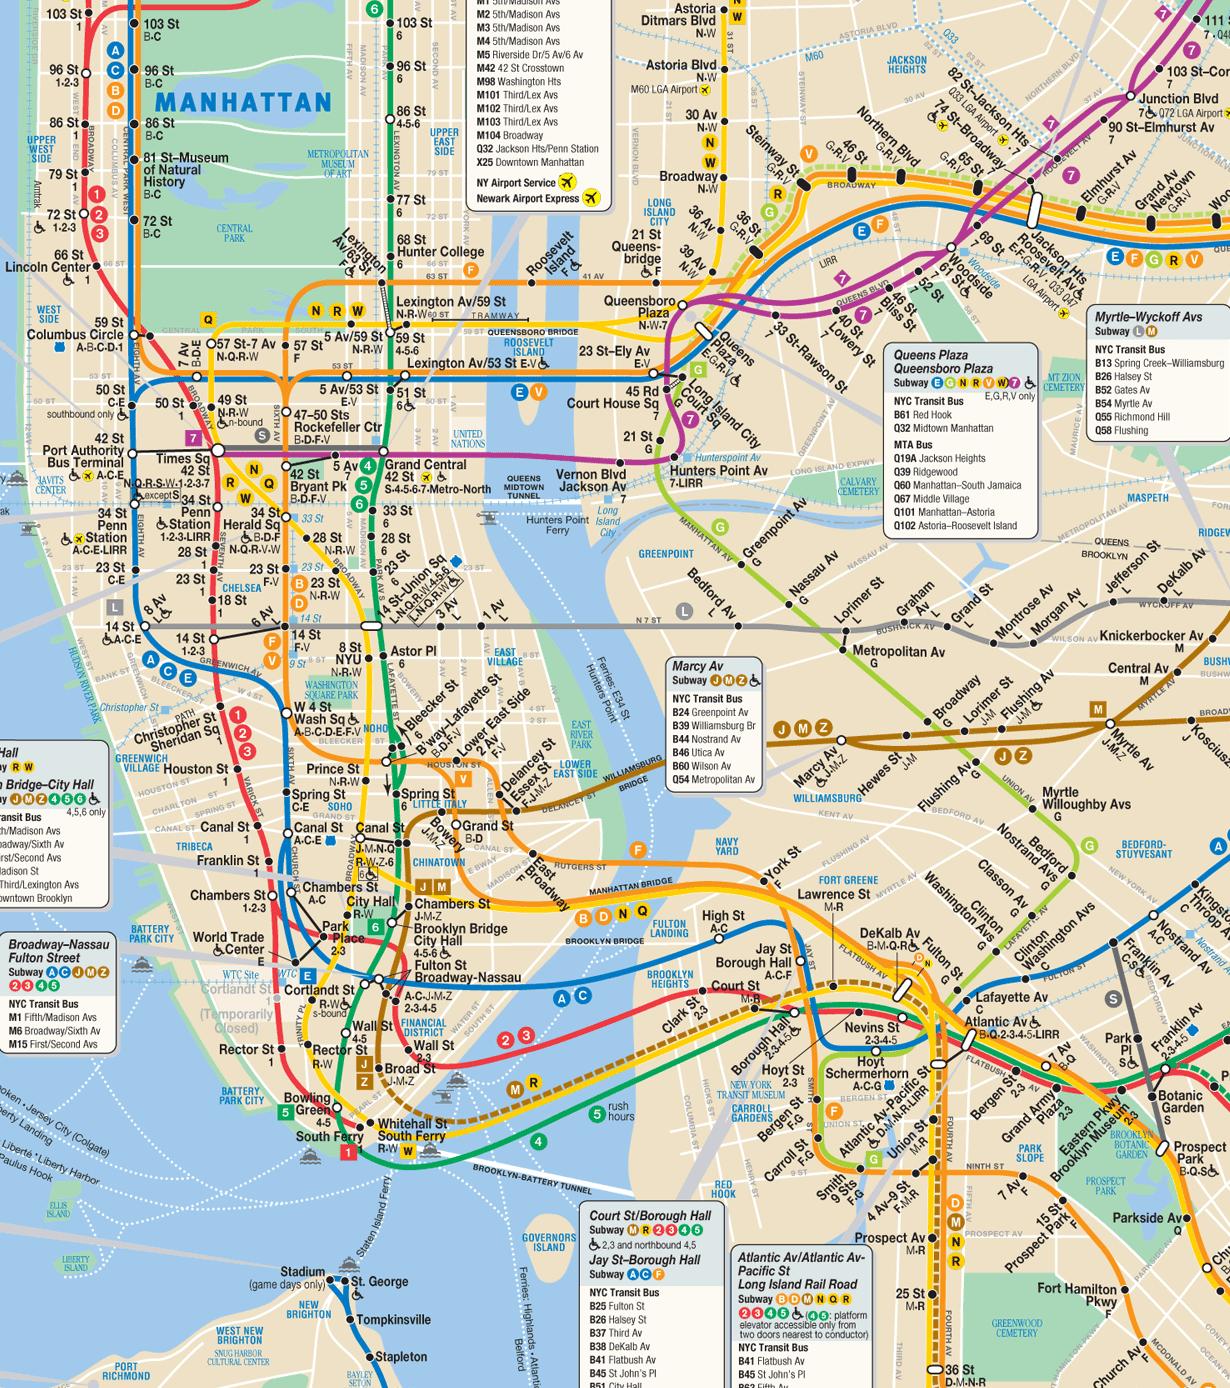 nyc bus and subway maps Nyc Bus And Subway Maps Mta Subway Bus Map New York Usa nyc bus and subway maps